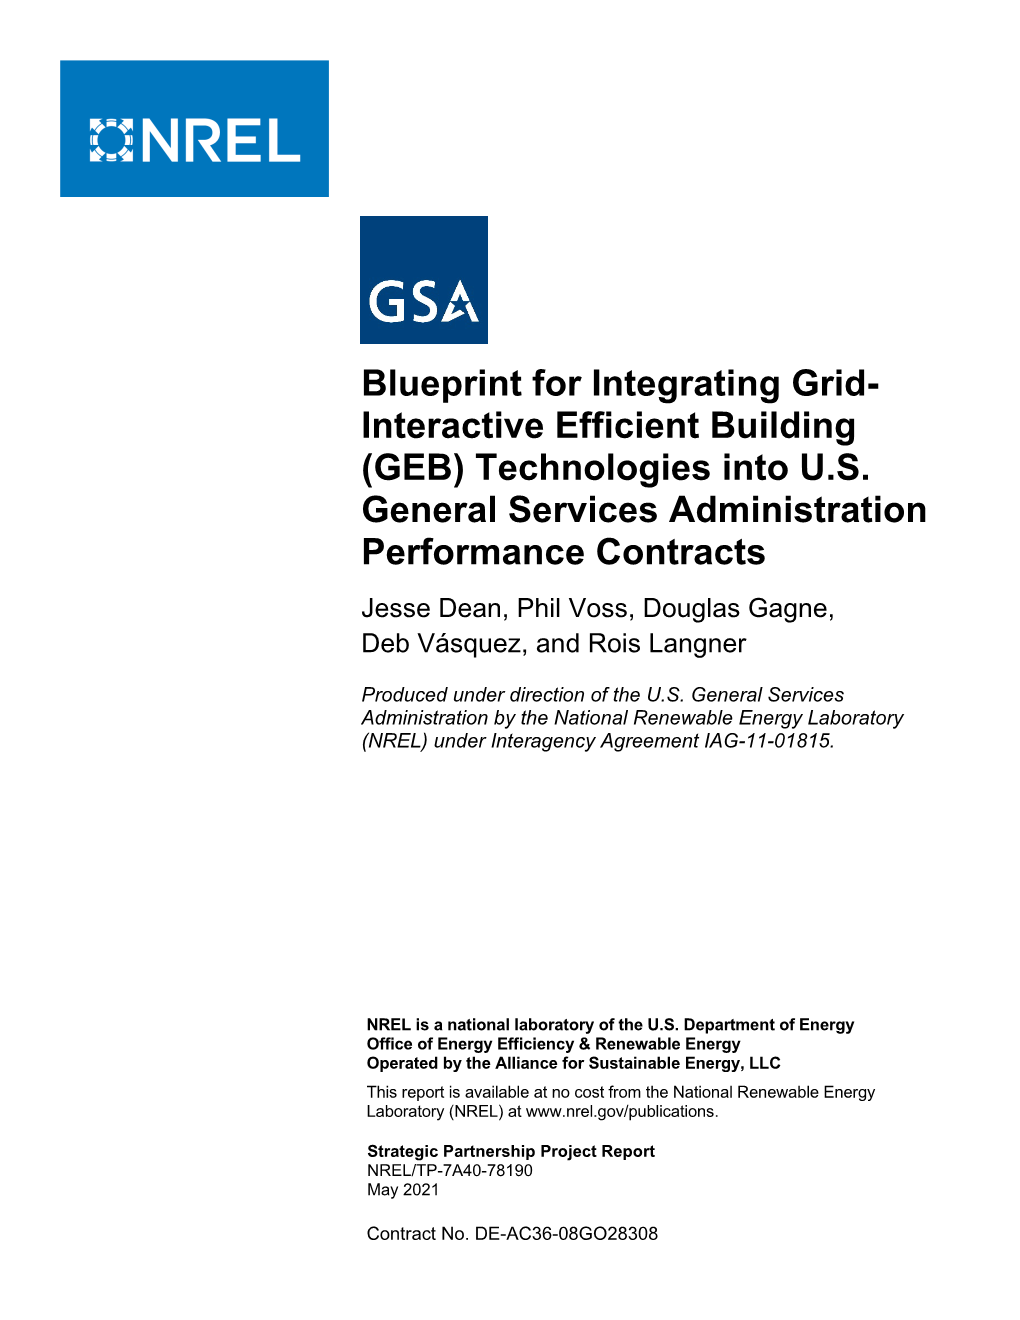 Blueprint for Integrating Grid-Interactive Efficient Building (GEB) Technologies Into U.S